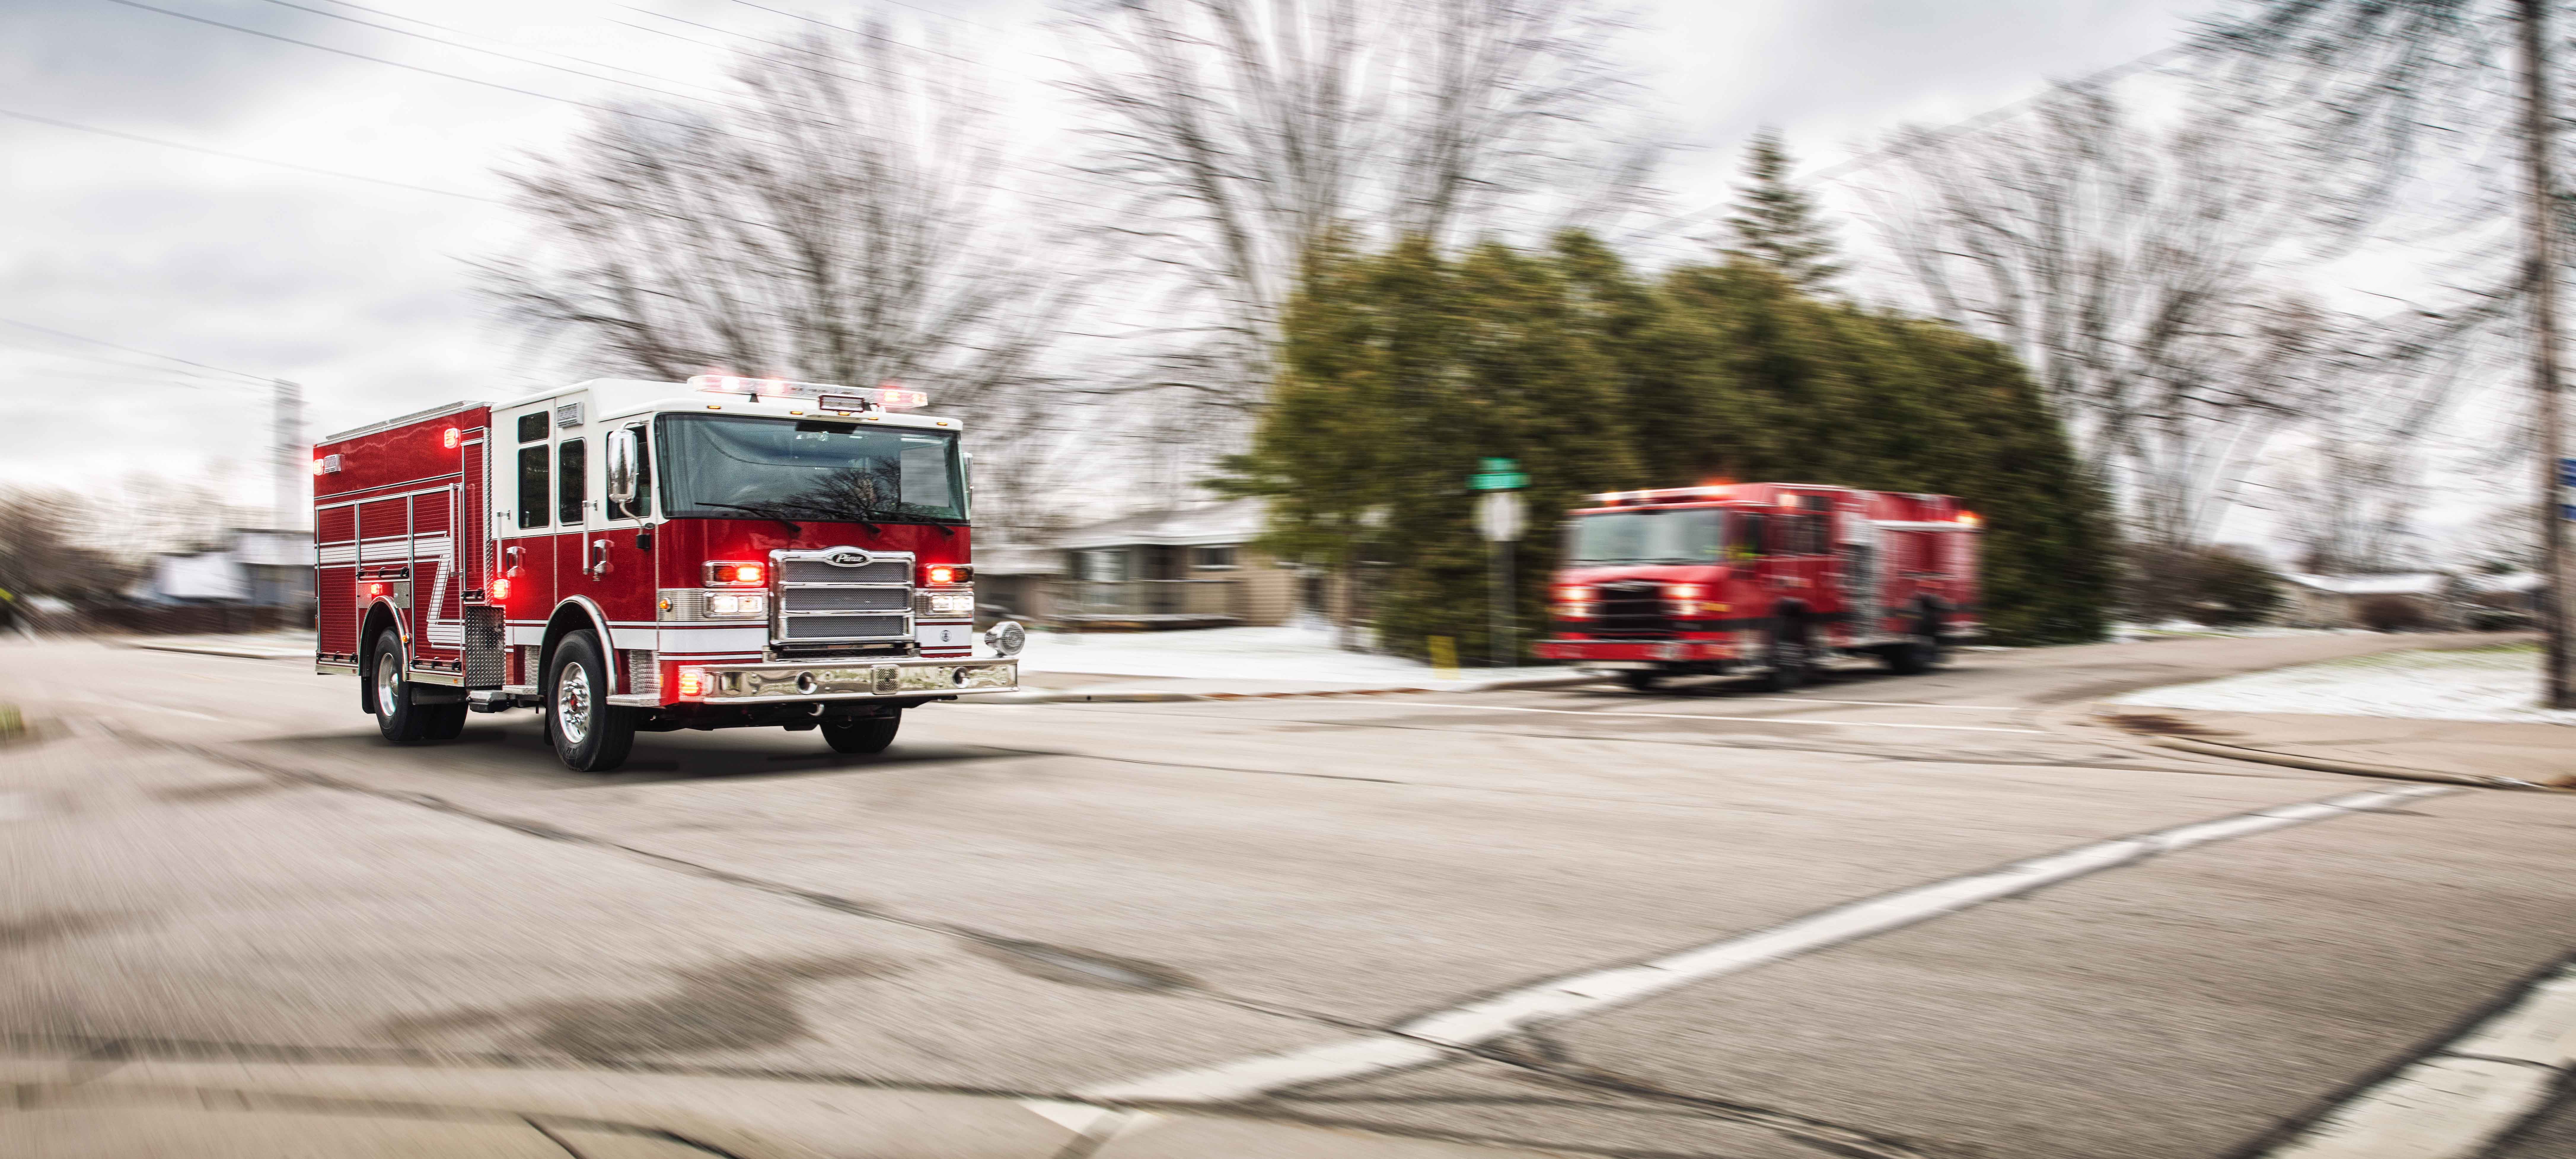 Pierce HAAS Alert Digital Fire Truck Collision Avoidance